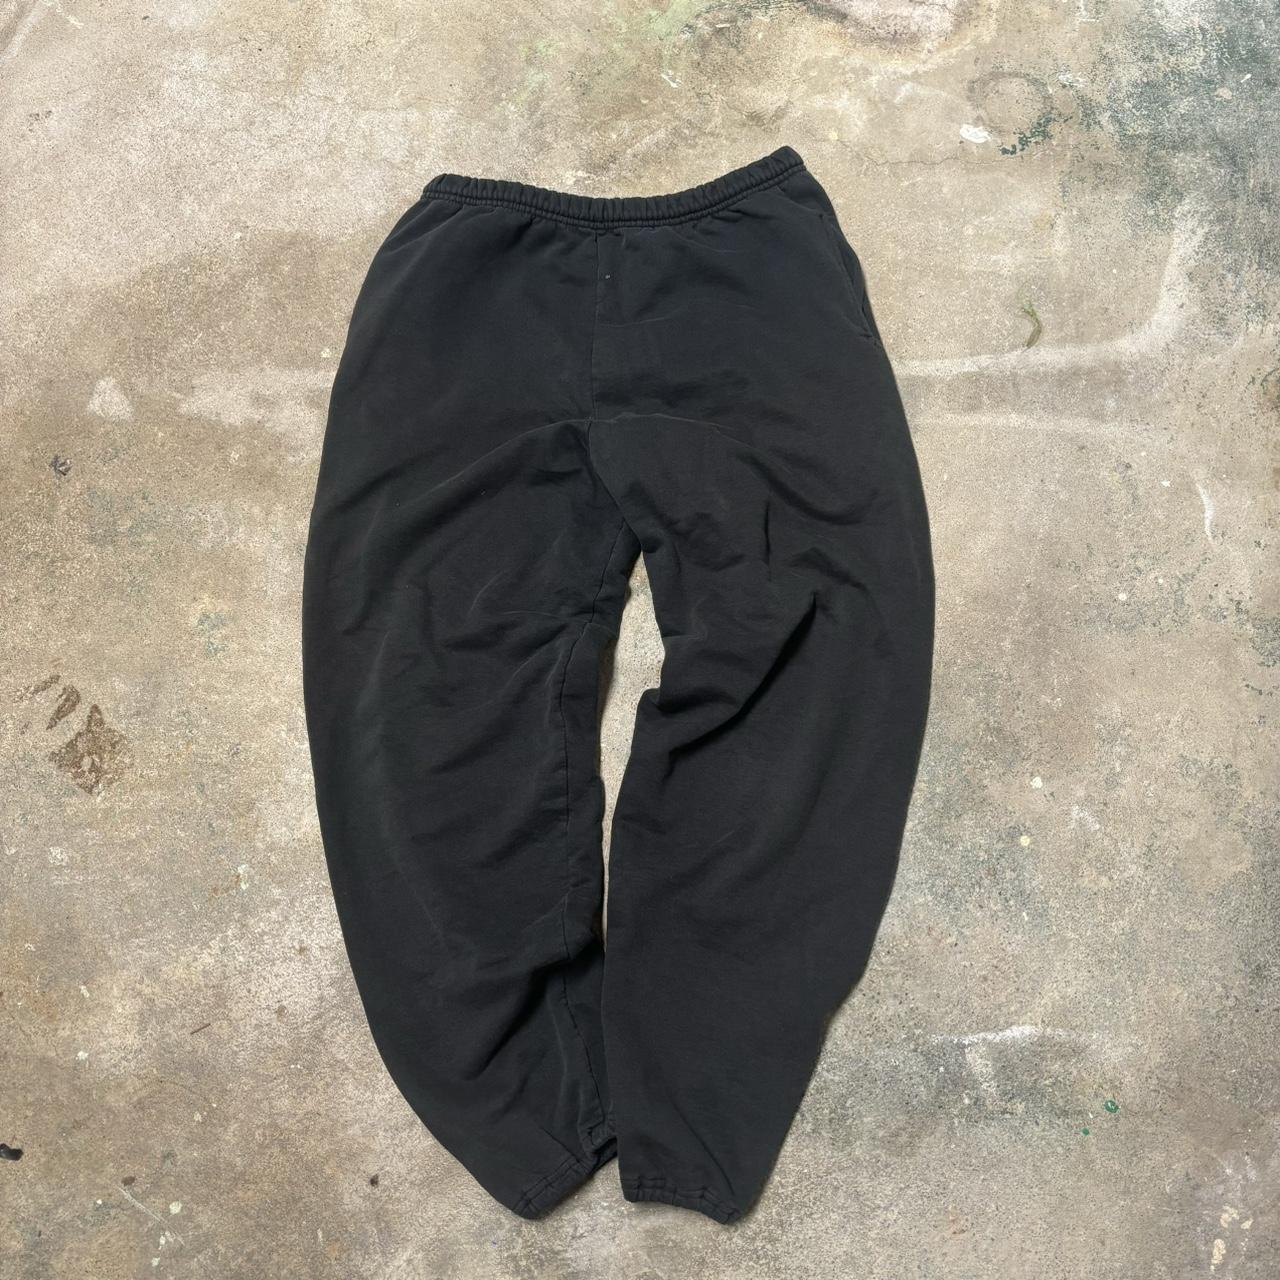 Vintage black sweats pants. Made USA. Size L. Dm... - Depop